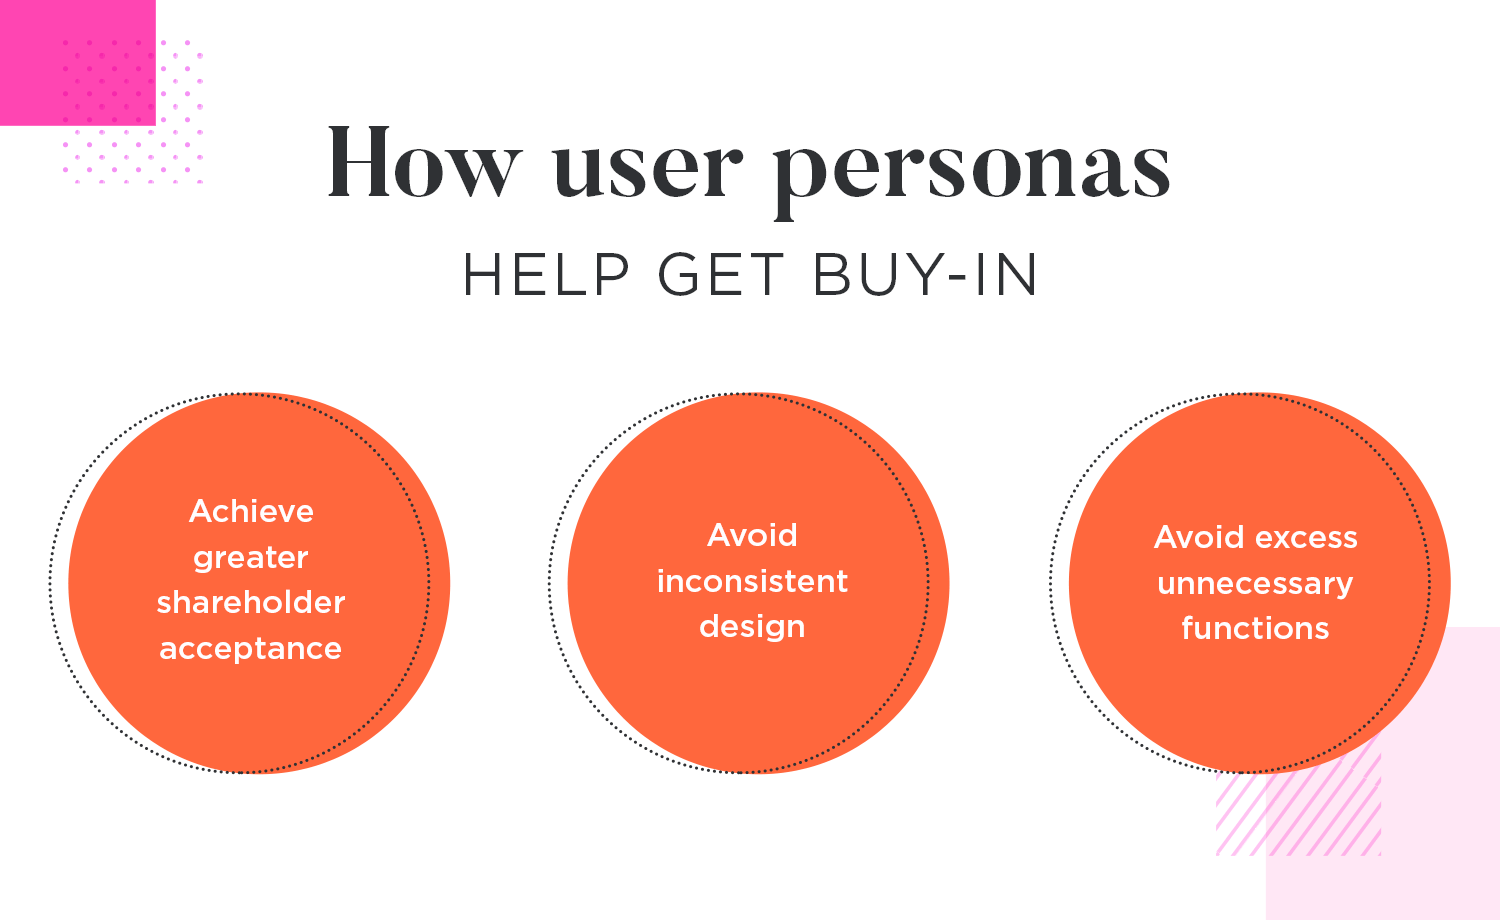 User personas help get buy-in from stakeholders